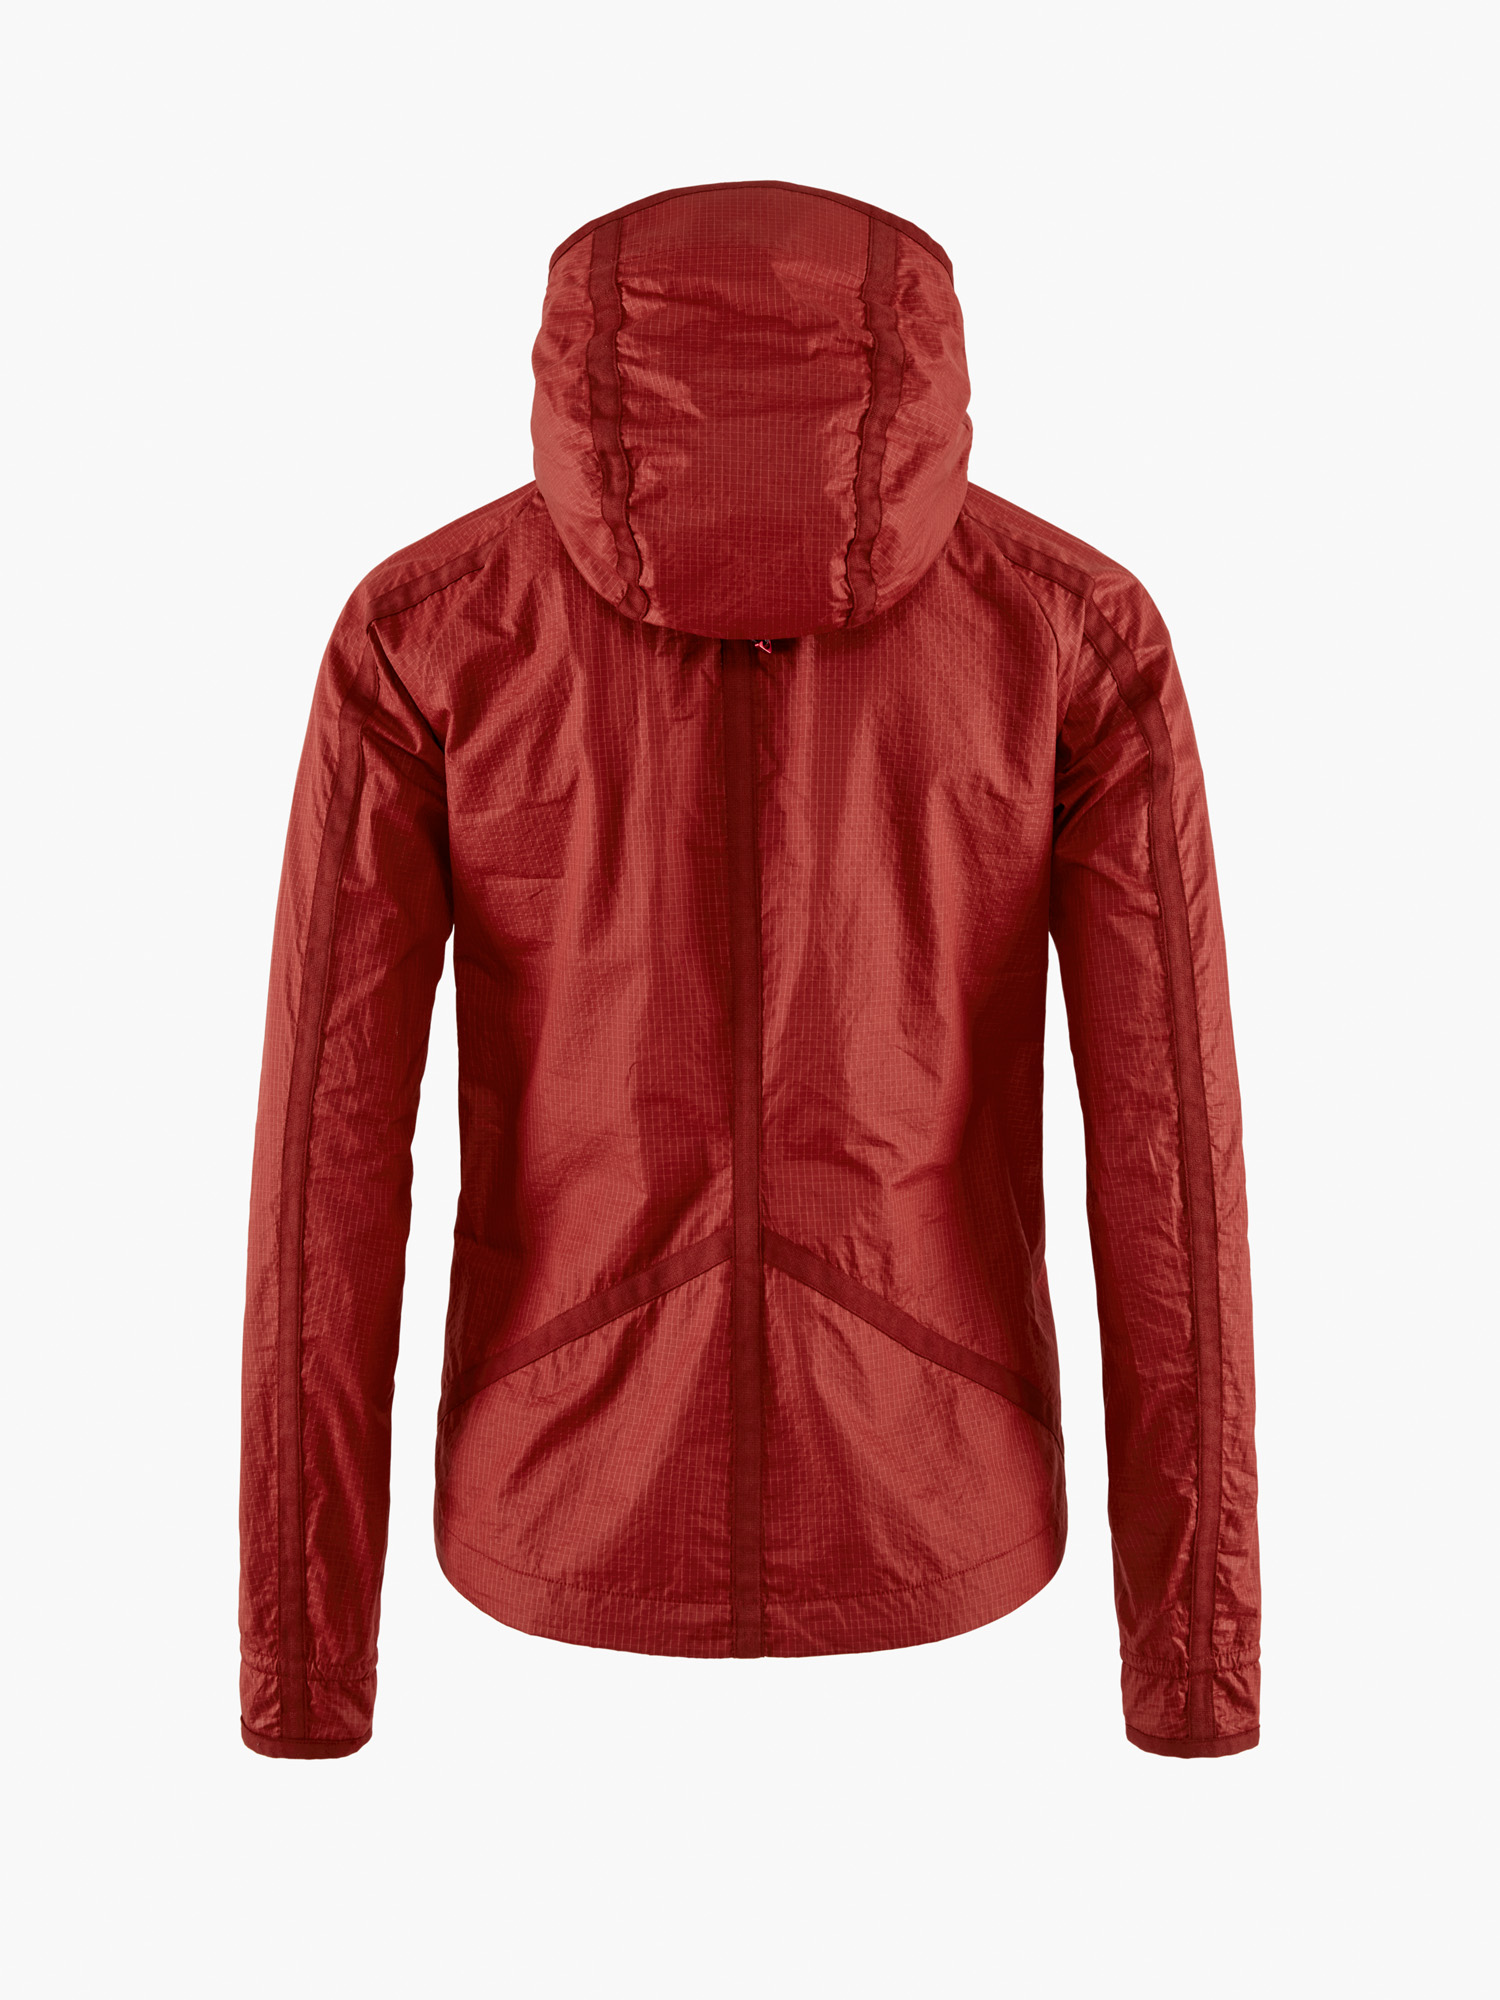 10653W11 - Ansur Hooded Wind Jacket W's - Rose Red